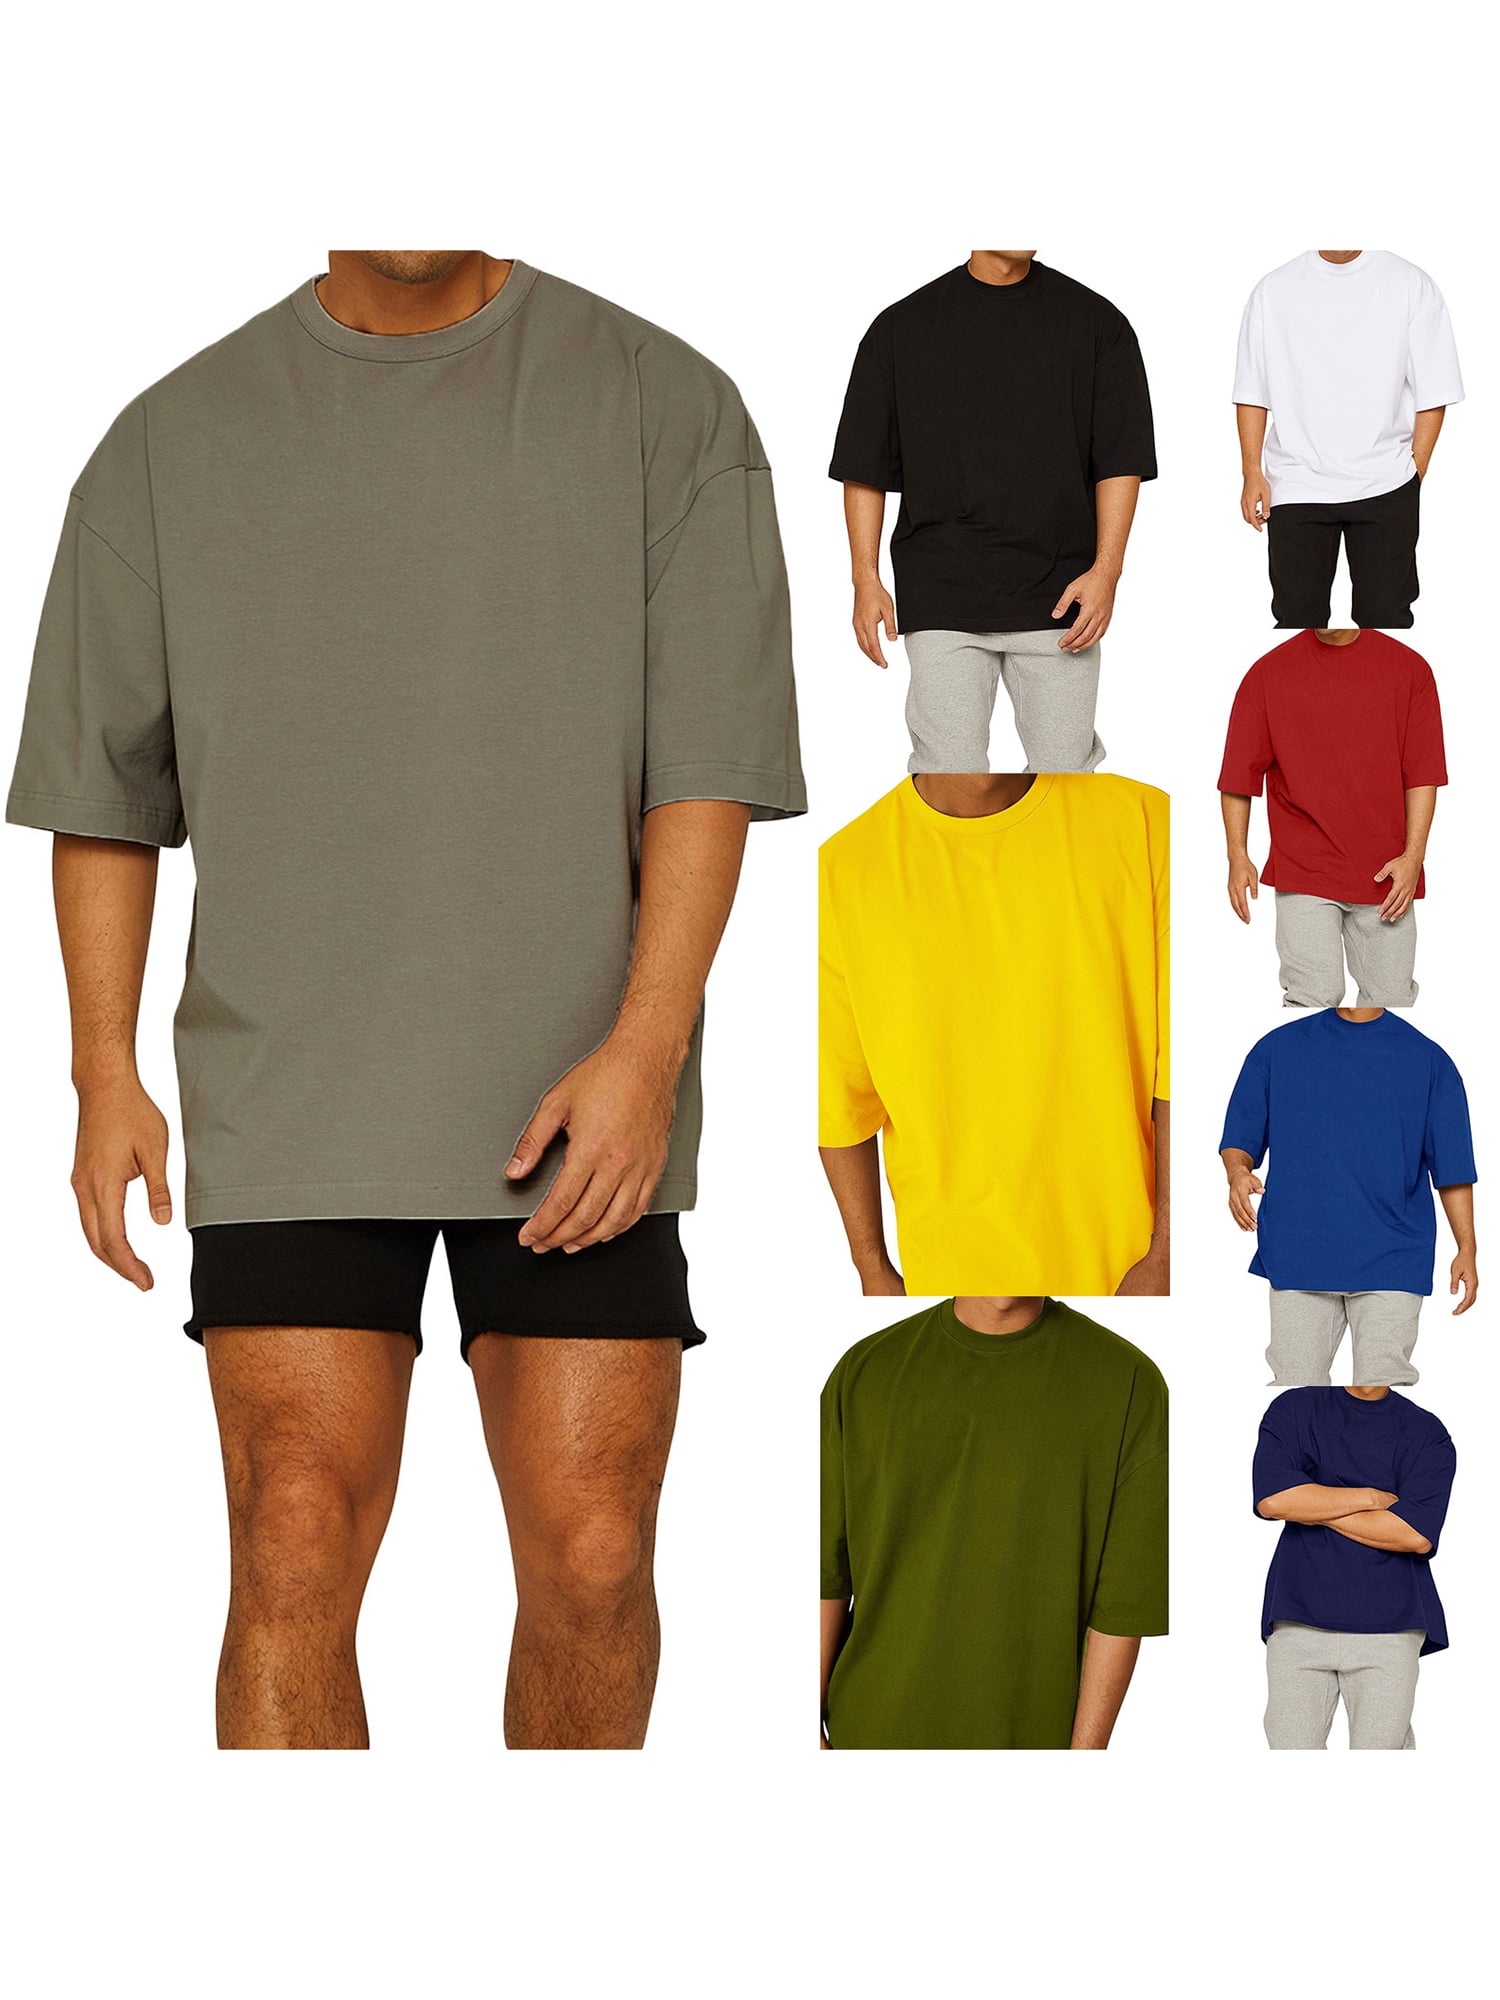 JXXIATANG Workout Shirts Short Sleeve Oversized Hipster Loose Gym Shirts Basketball Hip-hop Street Style T-shirts for Men, Men's, Size: 3XL, Black